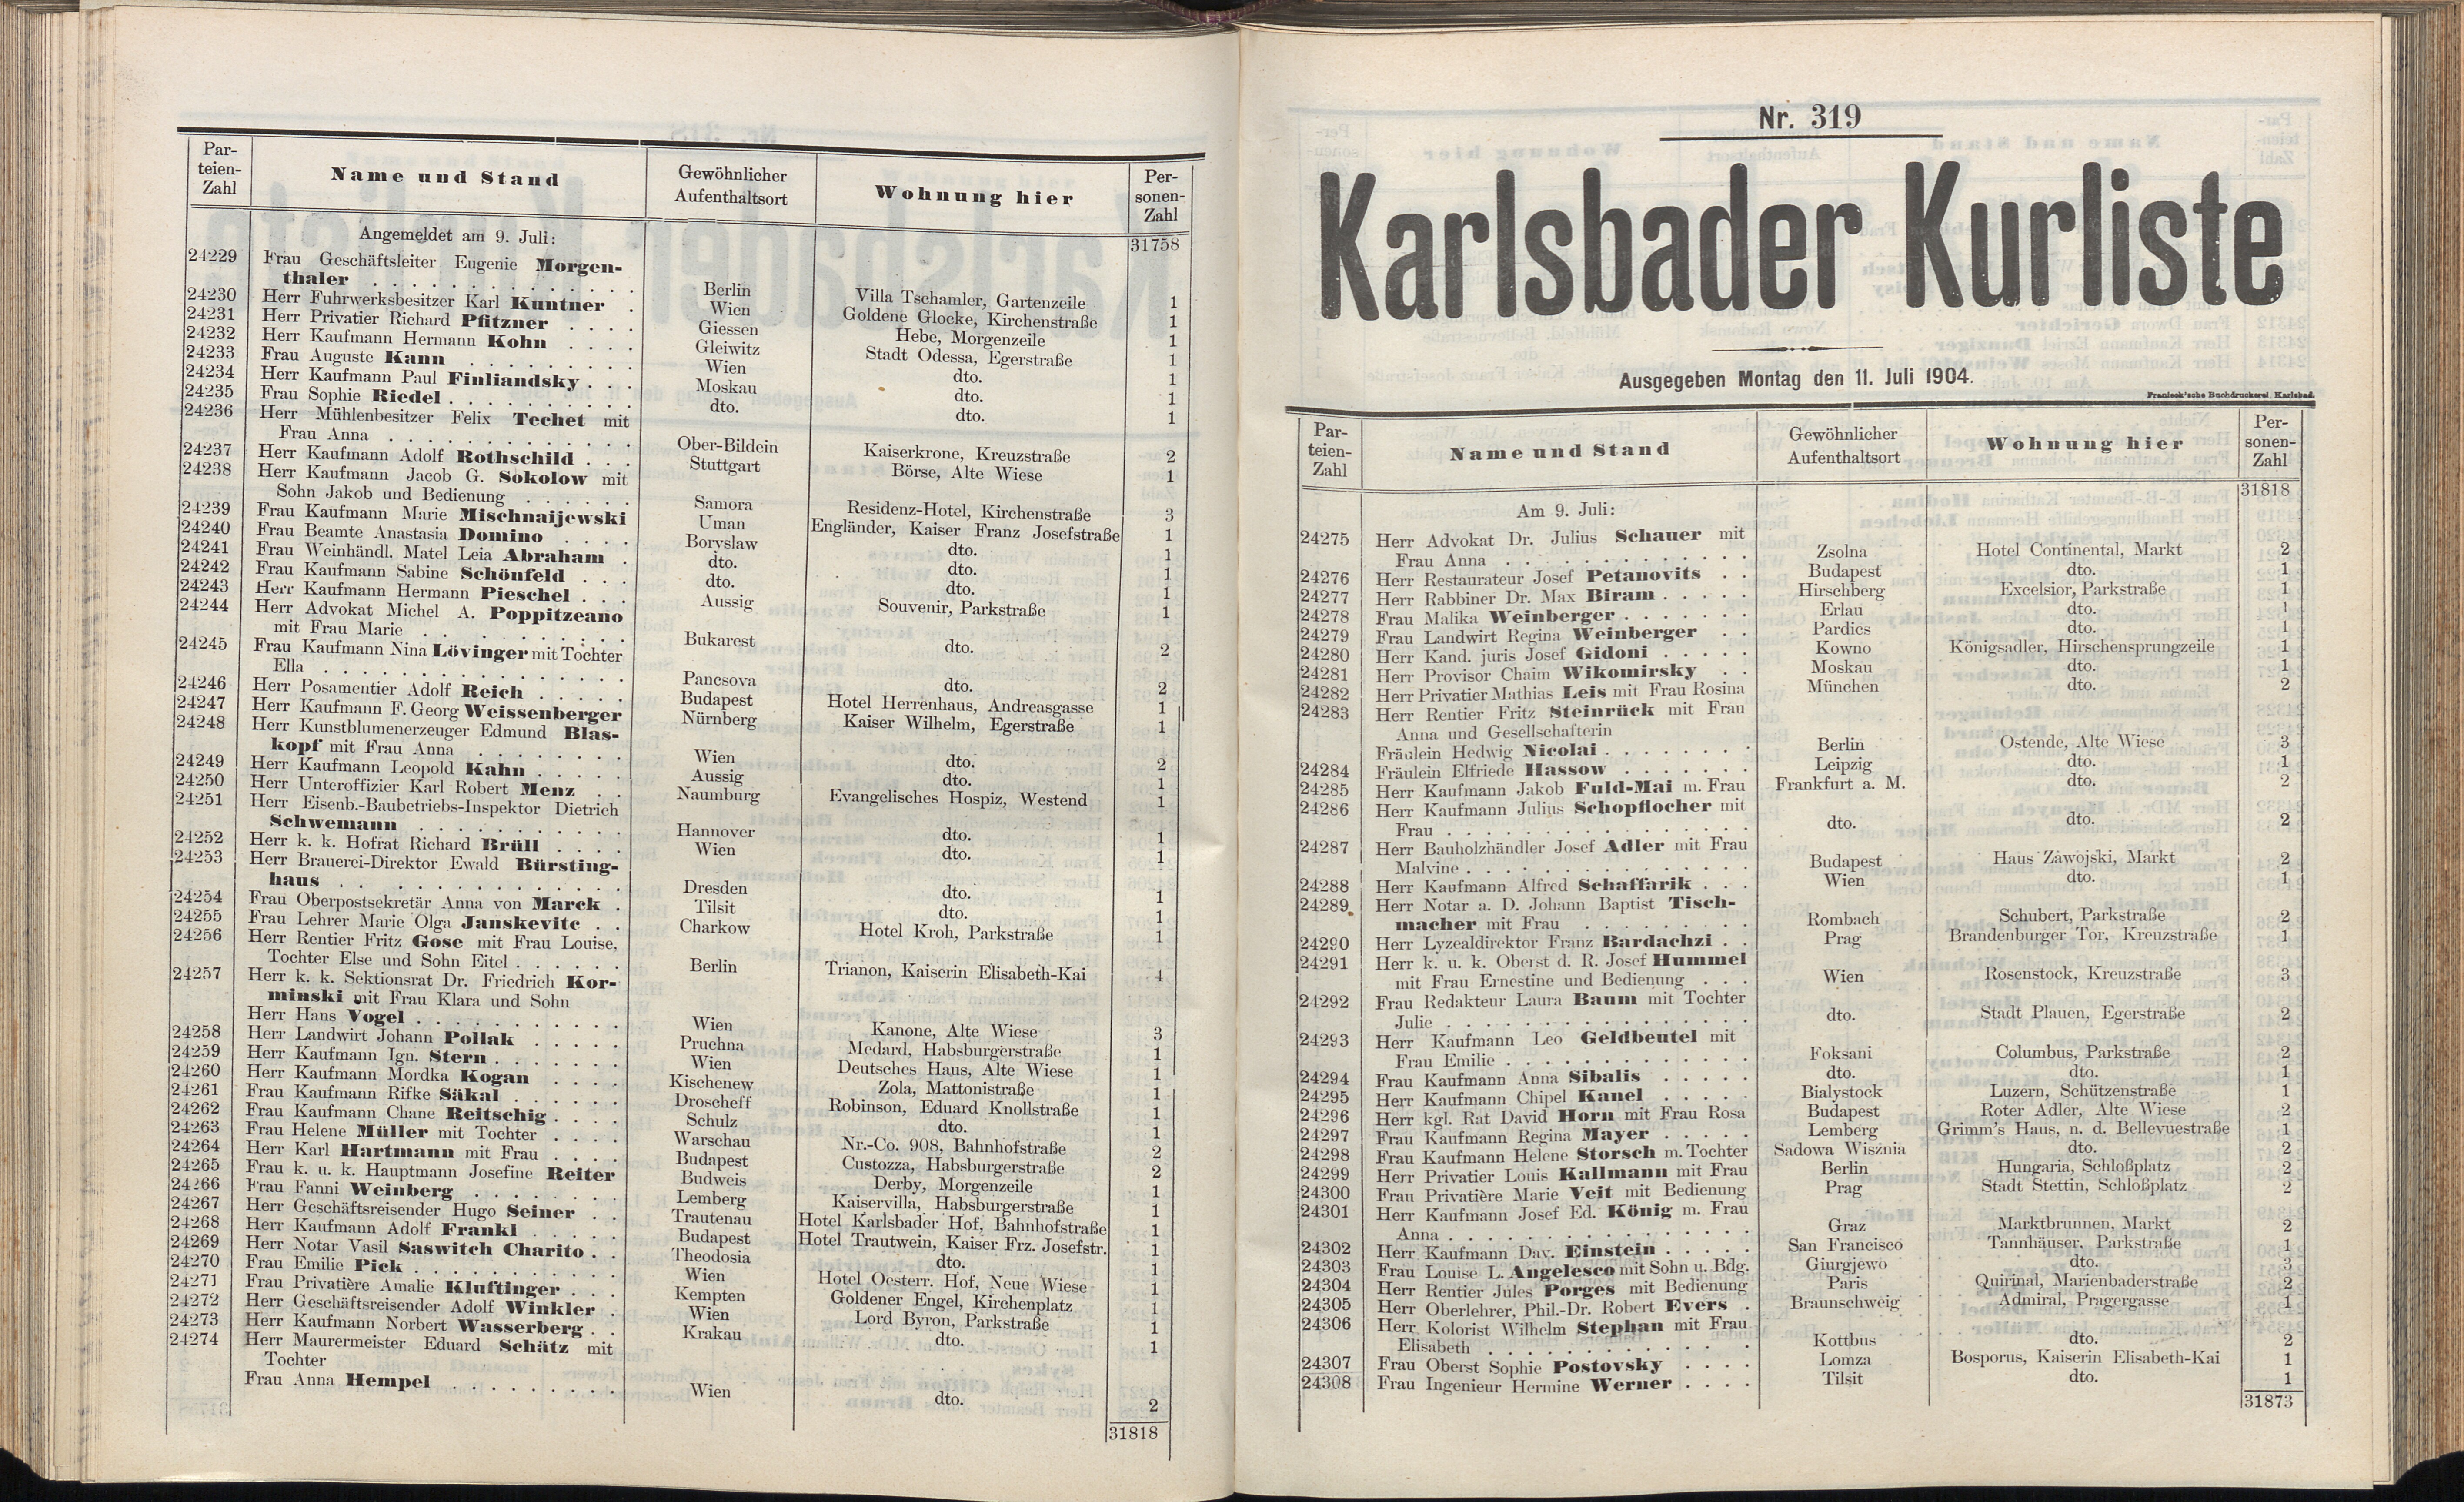 341. soap-kv_knihovna_karlsbader-kurliste-1904_3420